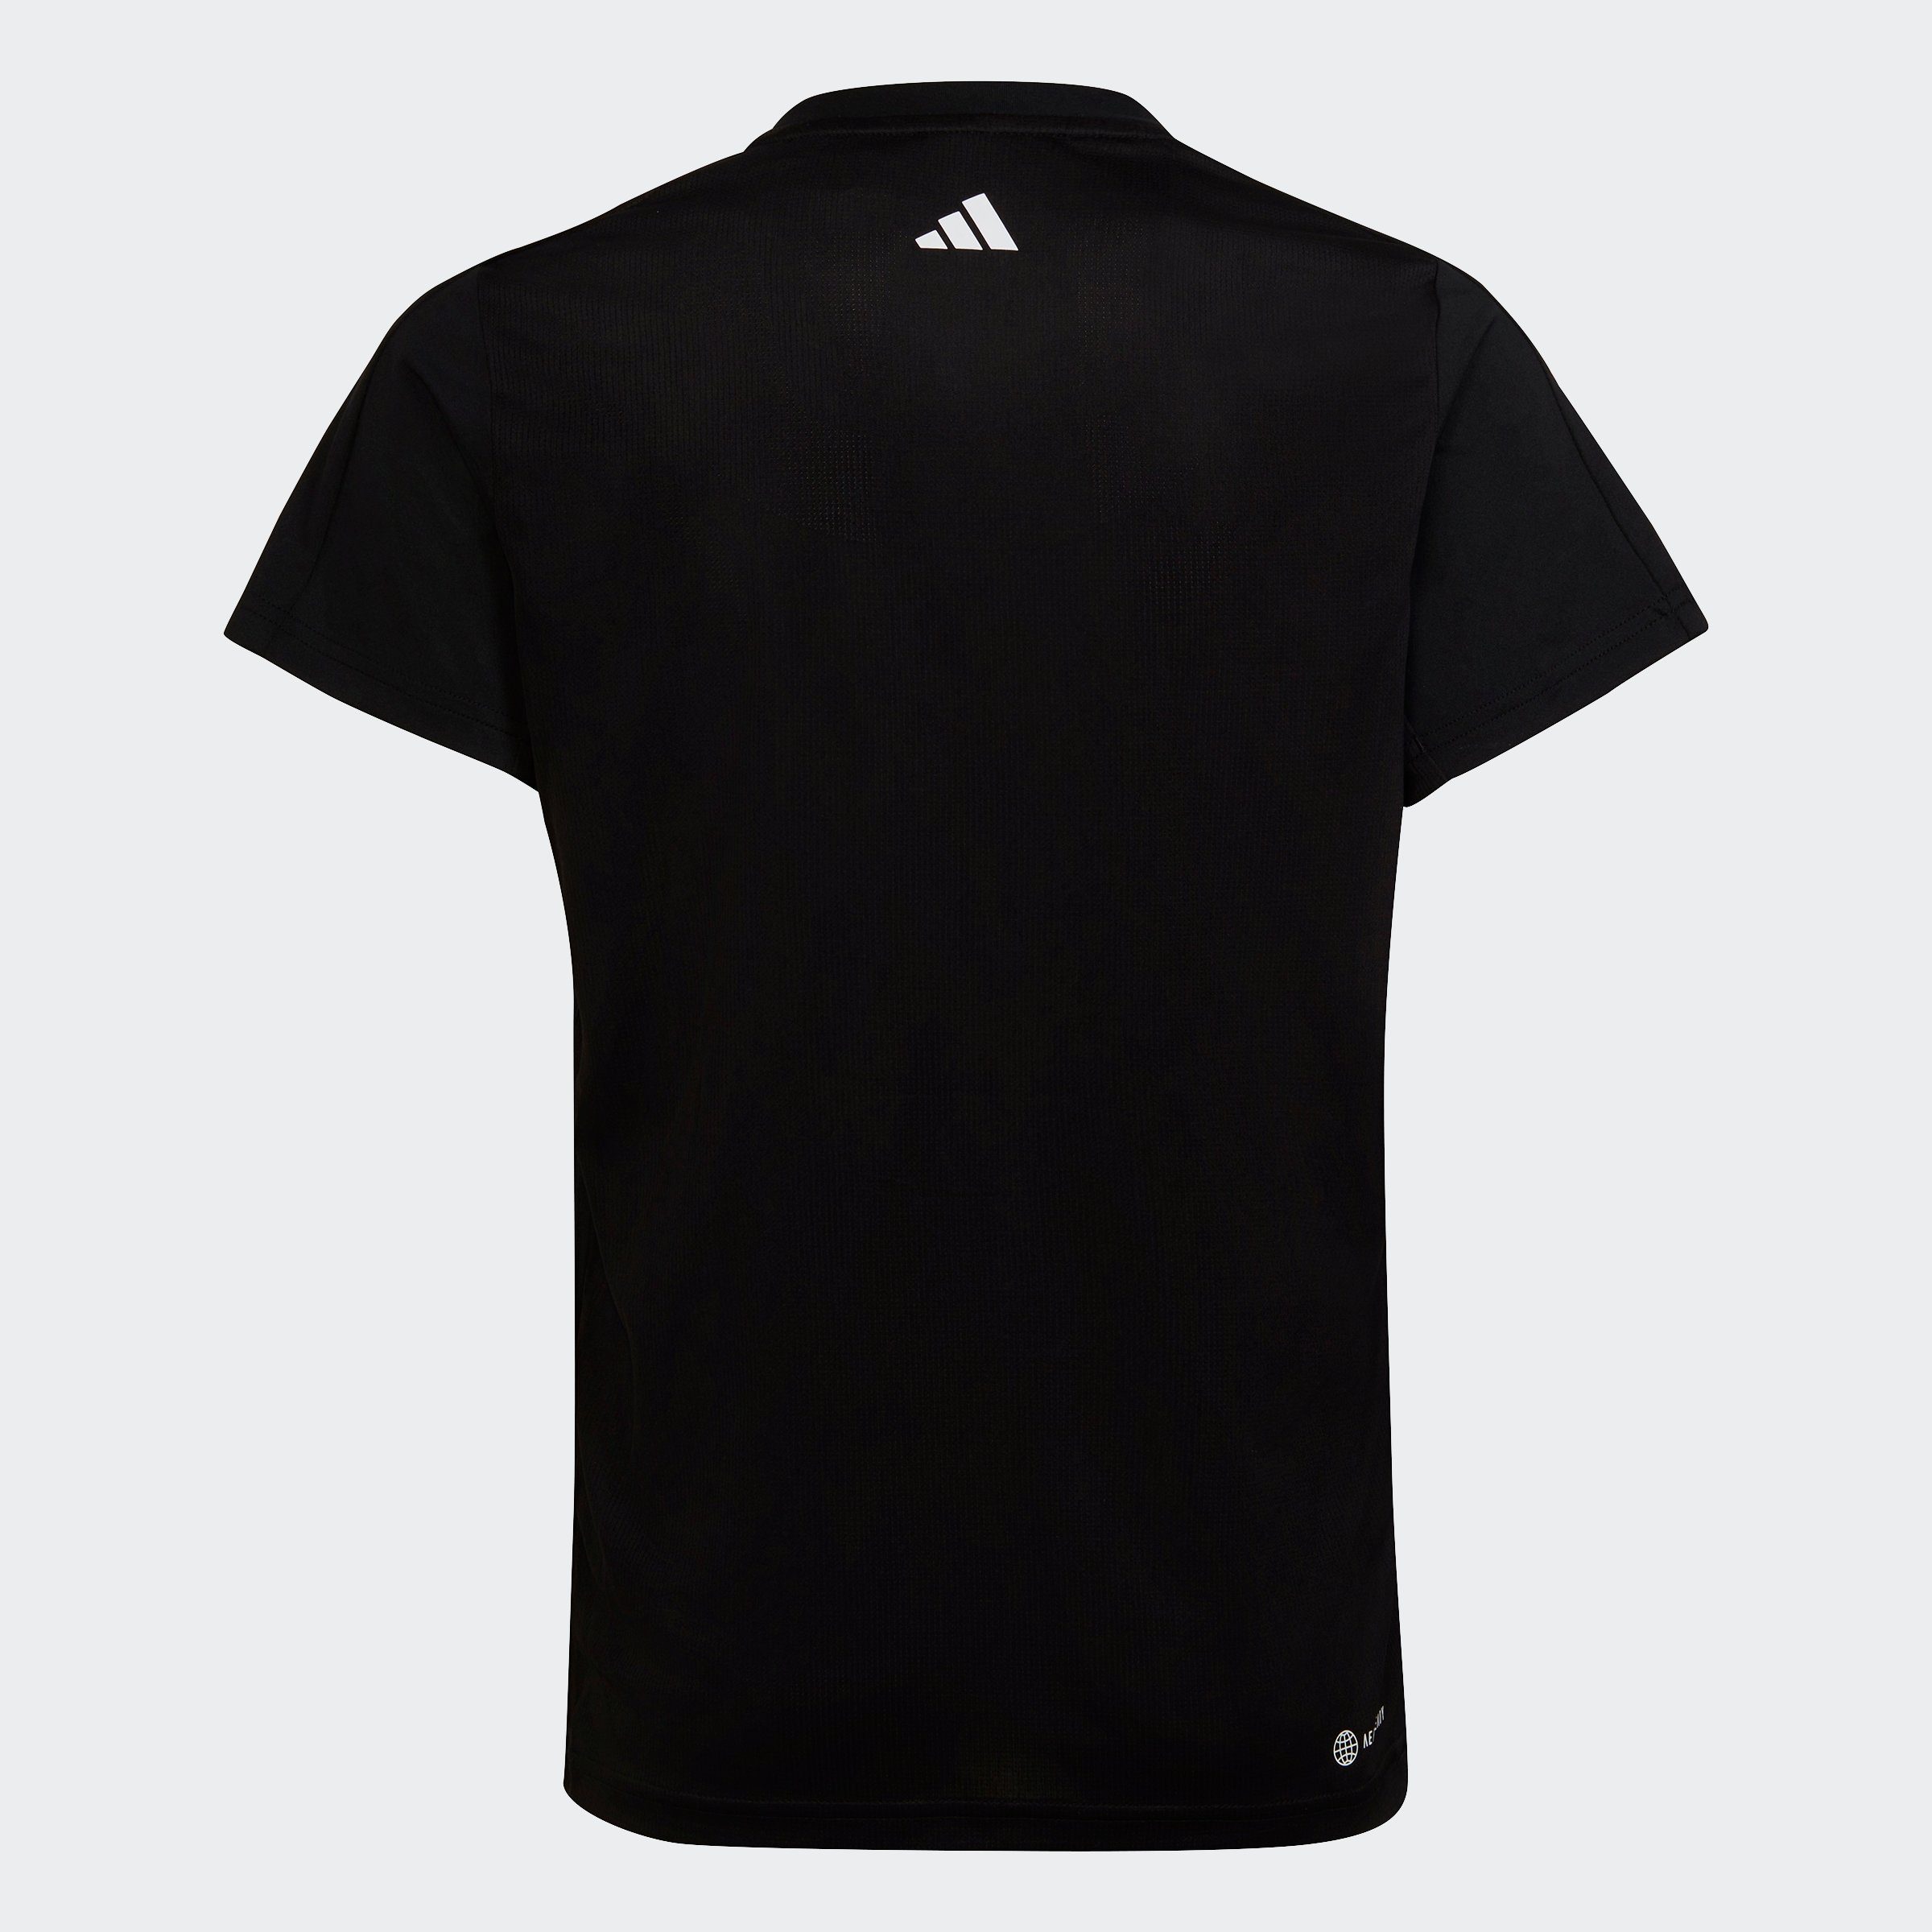 adidas LOGO AEROREADY T-Shirt adidas / ESSENTIALS White Sportswear Performance REGULAR-FIT Black